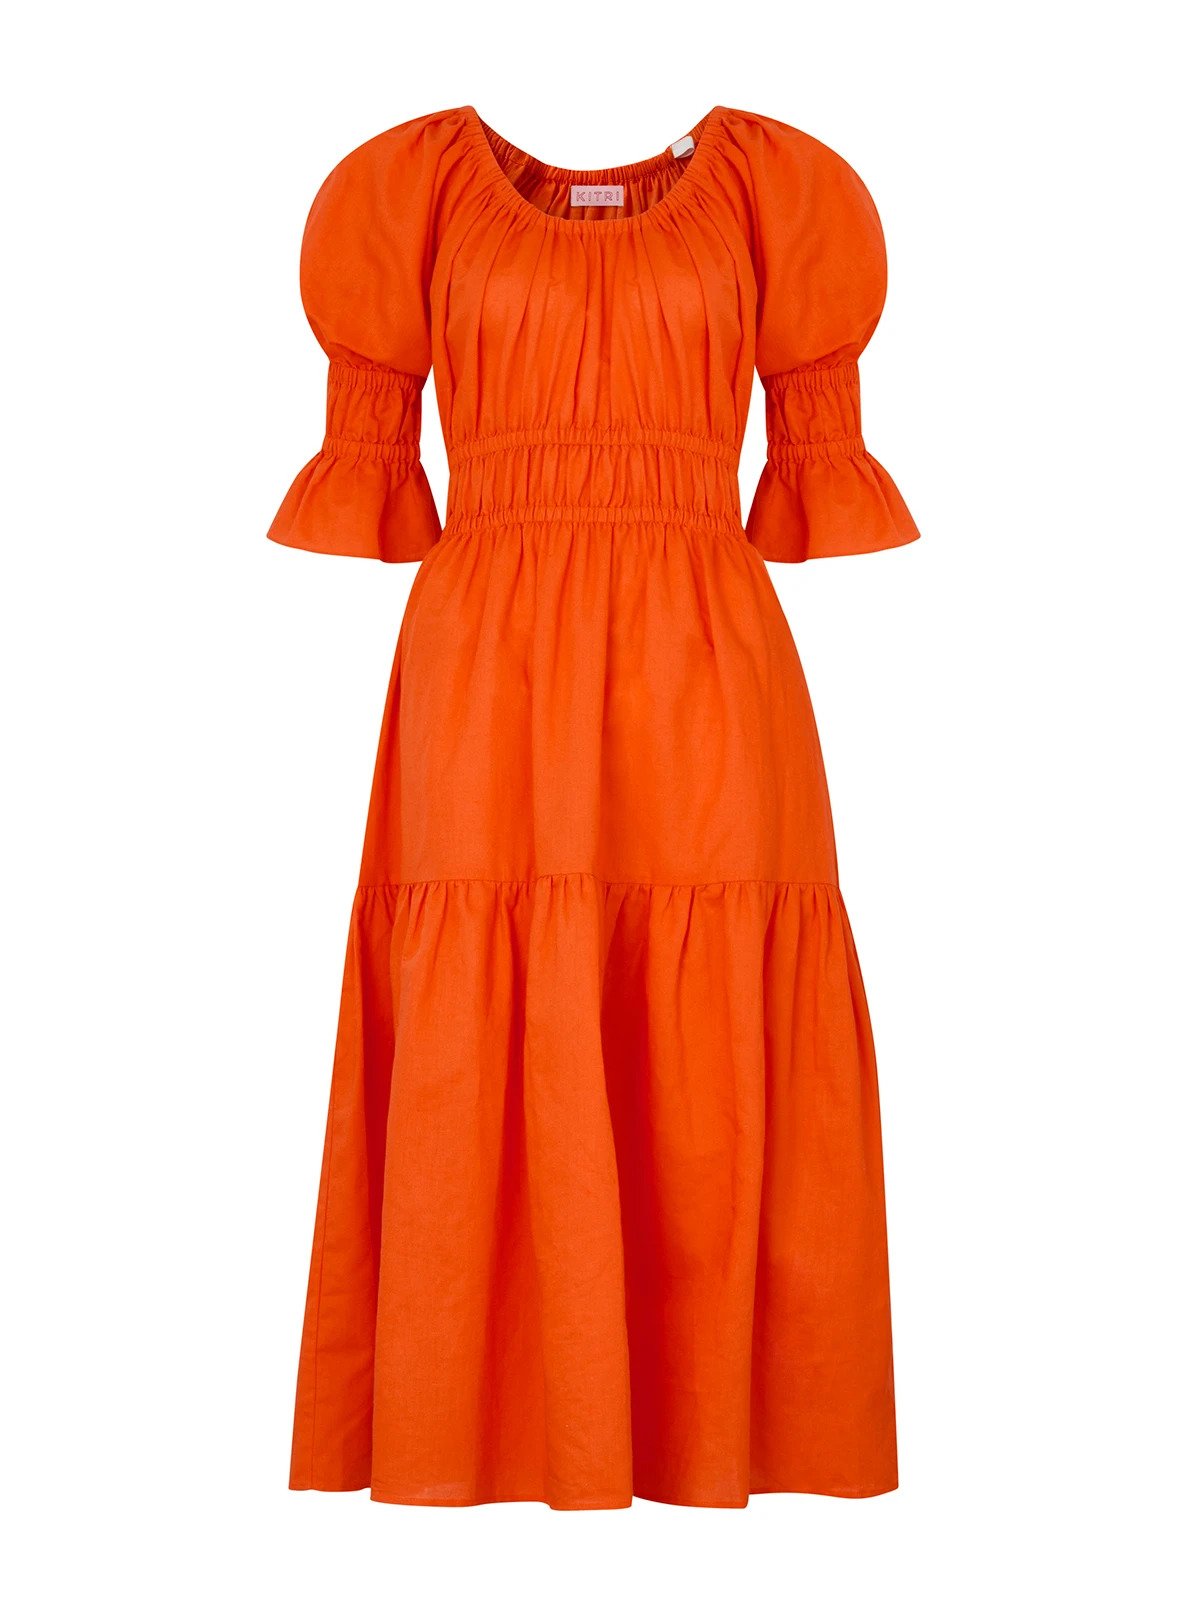 orange summer dresses uk